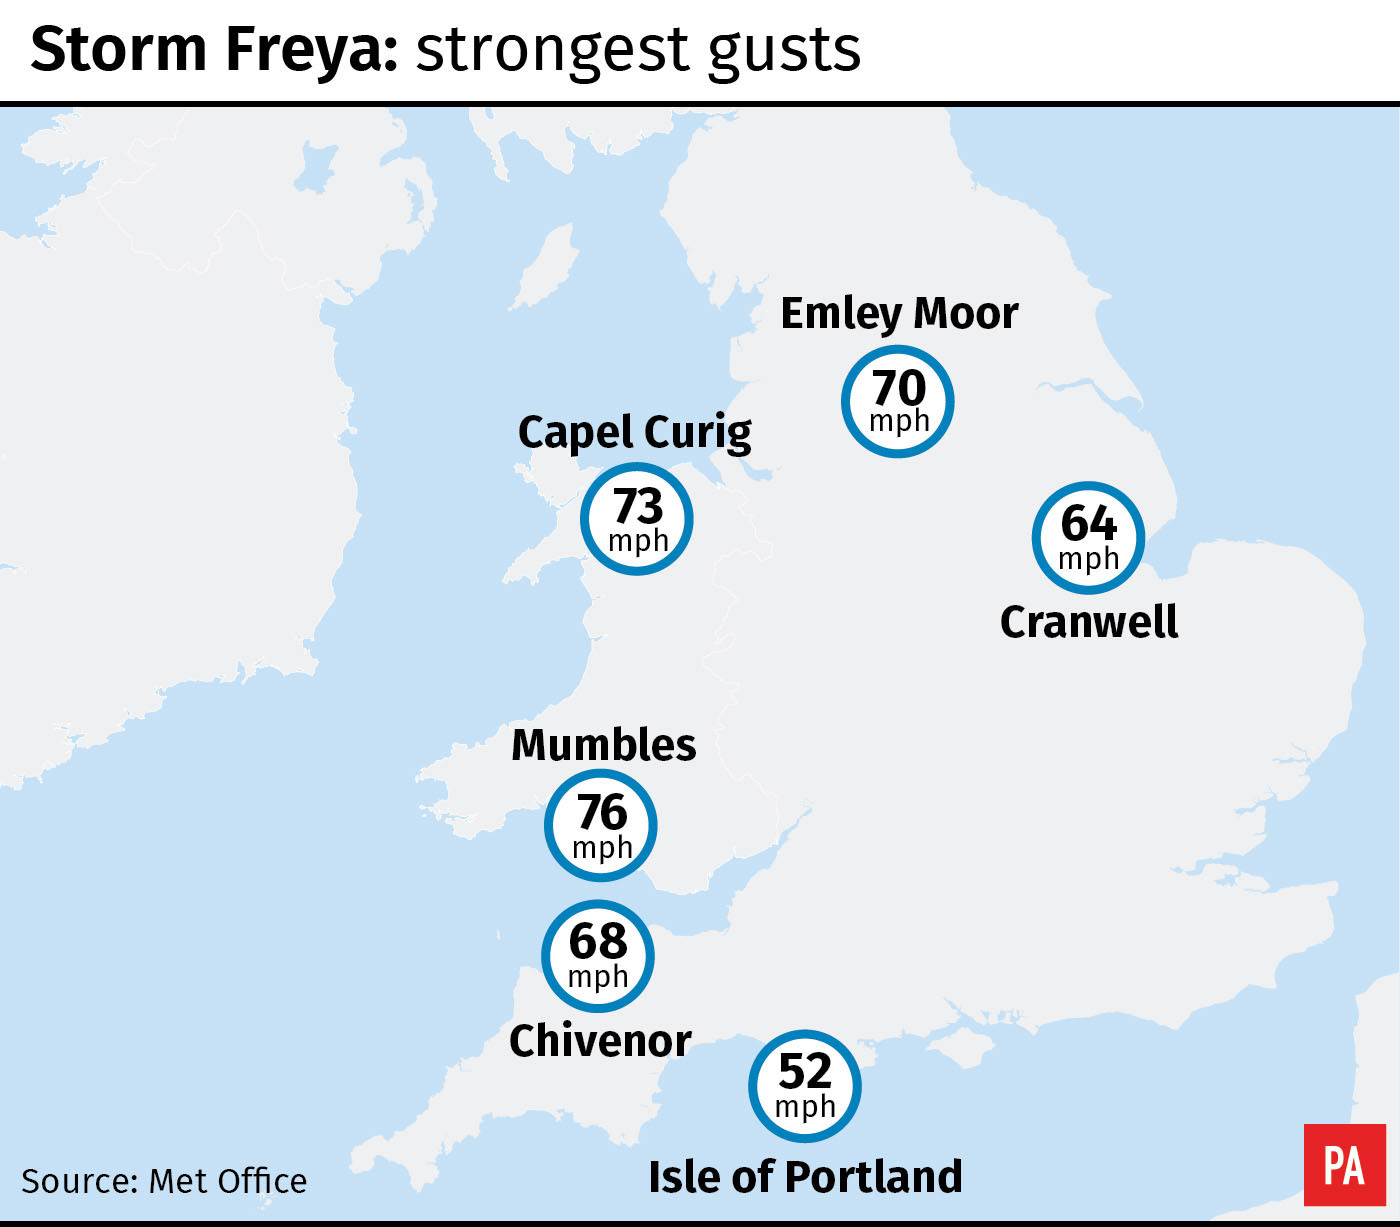 Storm Freya: strongest gusts